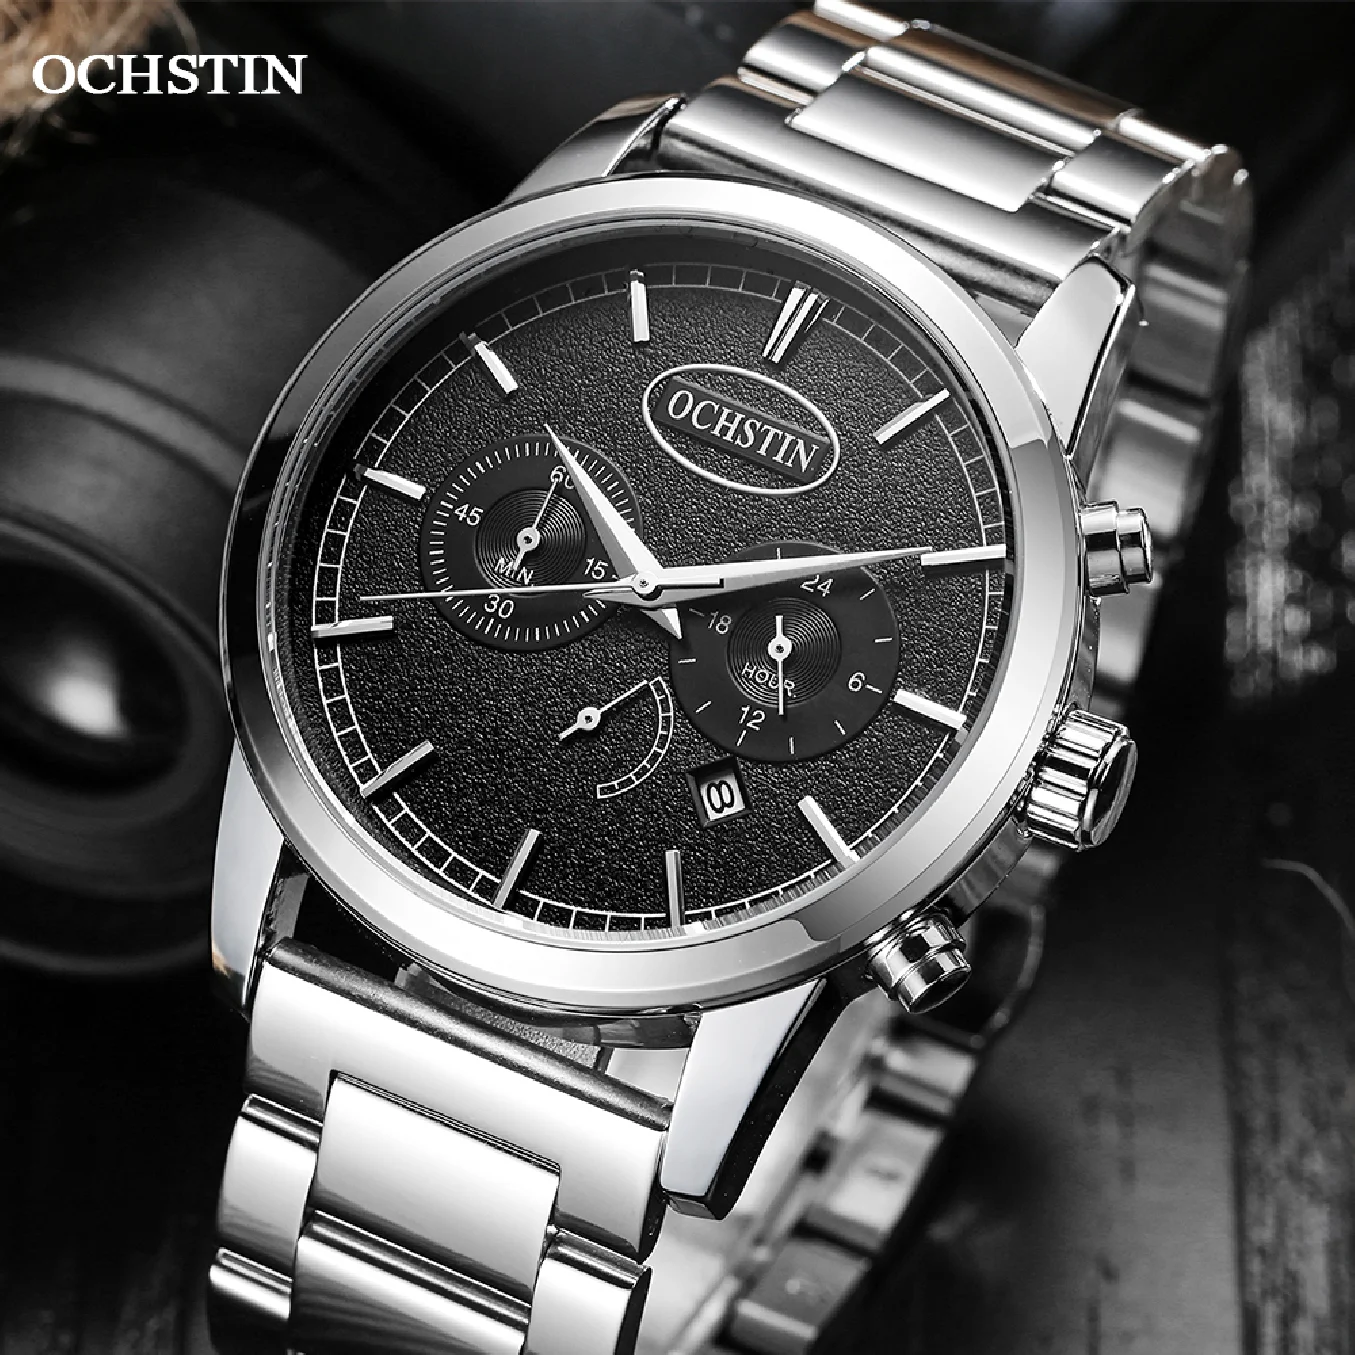 

��ѧ�� �ާ��ا�ܧڧ� �ߧѧ���ߧ�� 2021 Pilot Watches Quartz Chronograph Clock OCHSTIN Top Brand Luxury Stainless Steel Wristwatch GQ067D